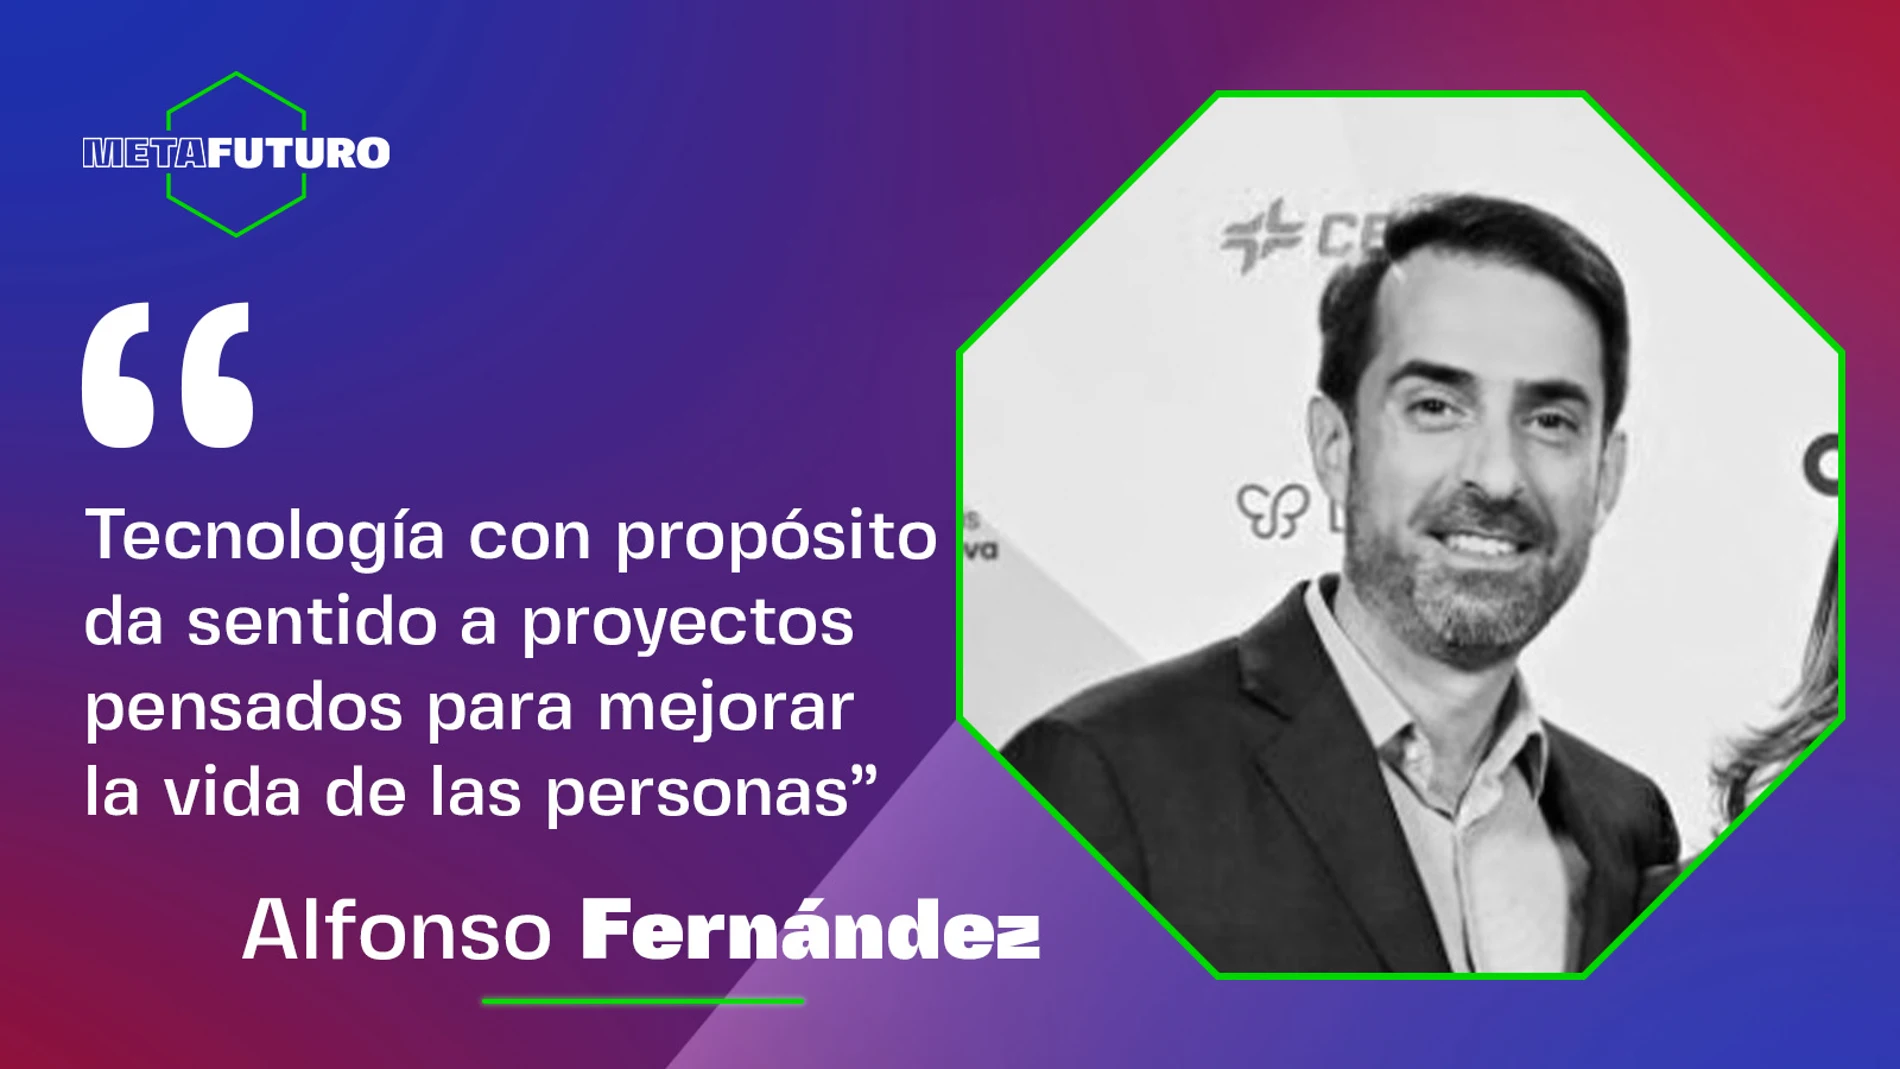 Alfonso Férnandez, Iberian CMO & Head of Ecommerce en Samsung